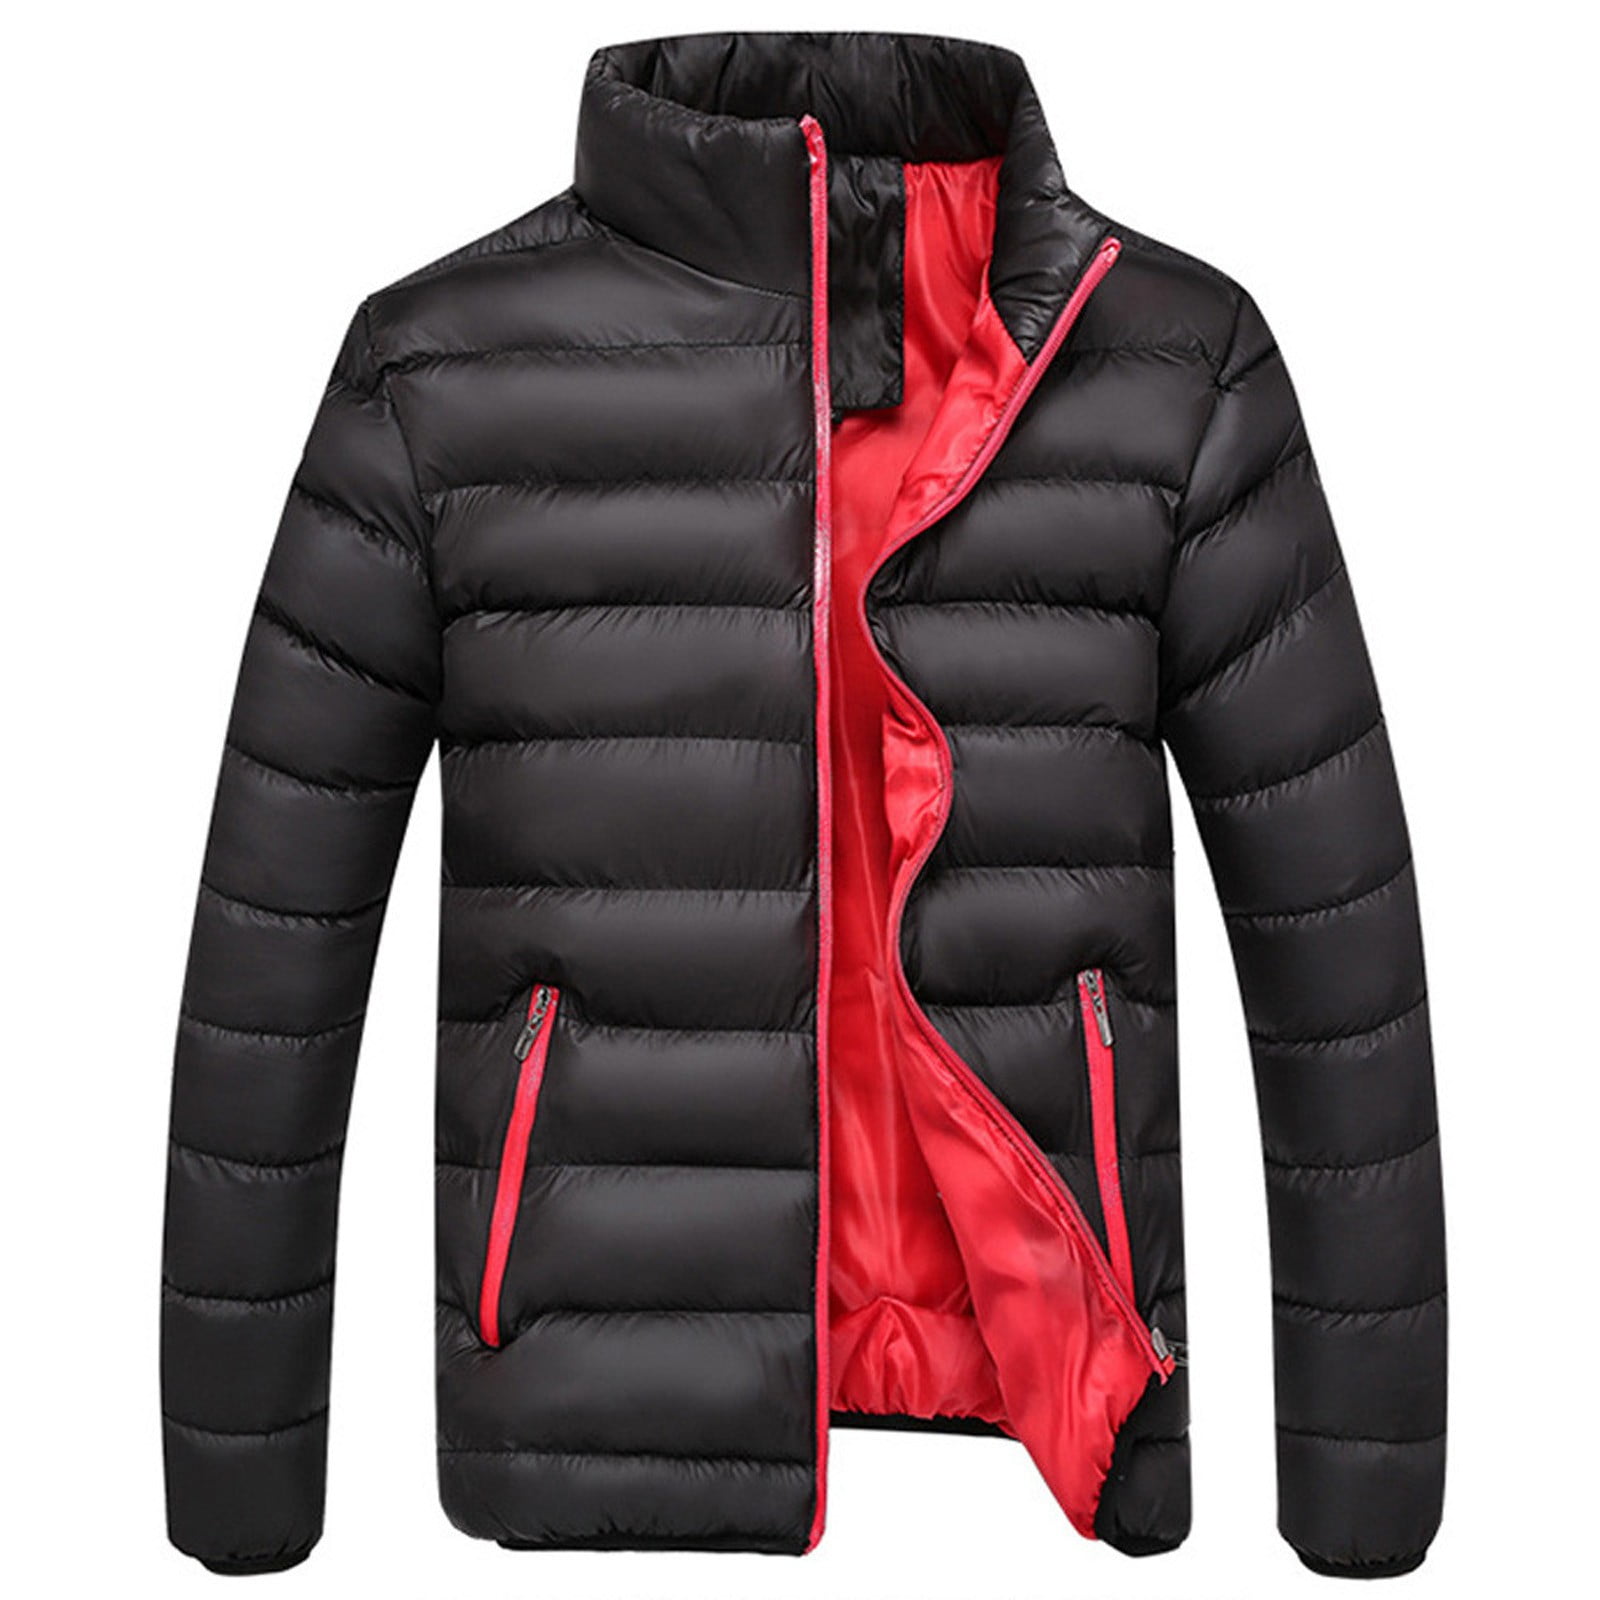 JSGEK Sales Men's Winter Coats Warm Thicken Jacket Zipper